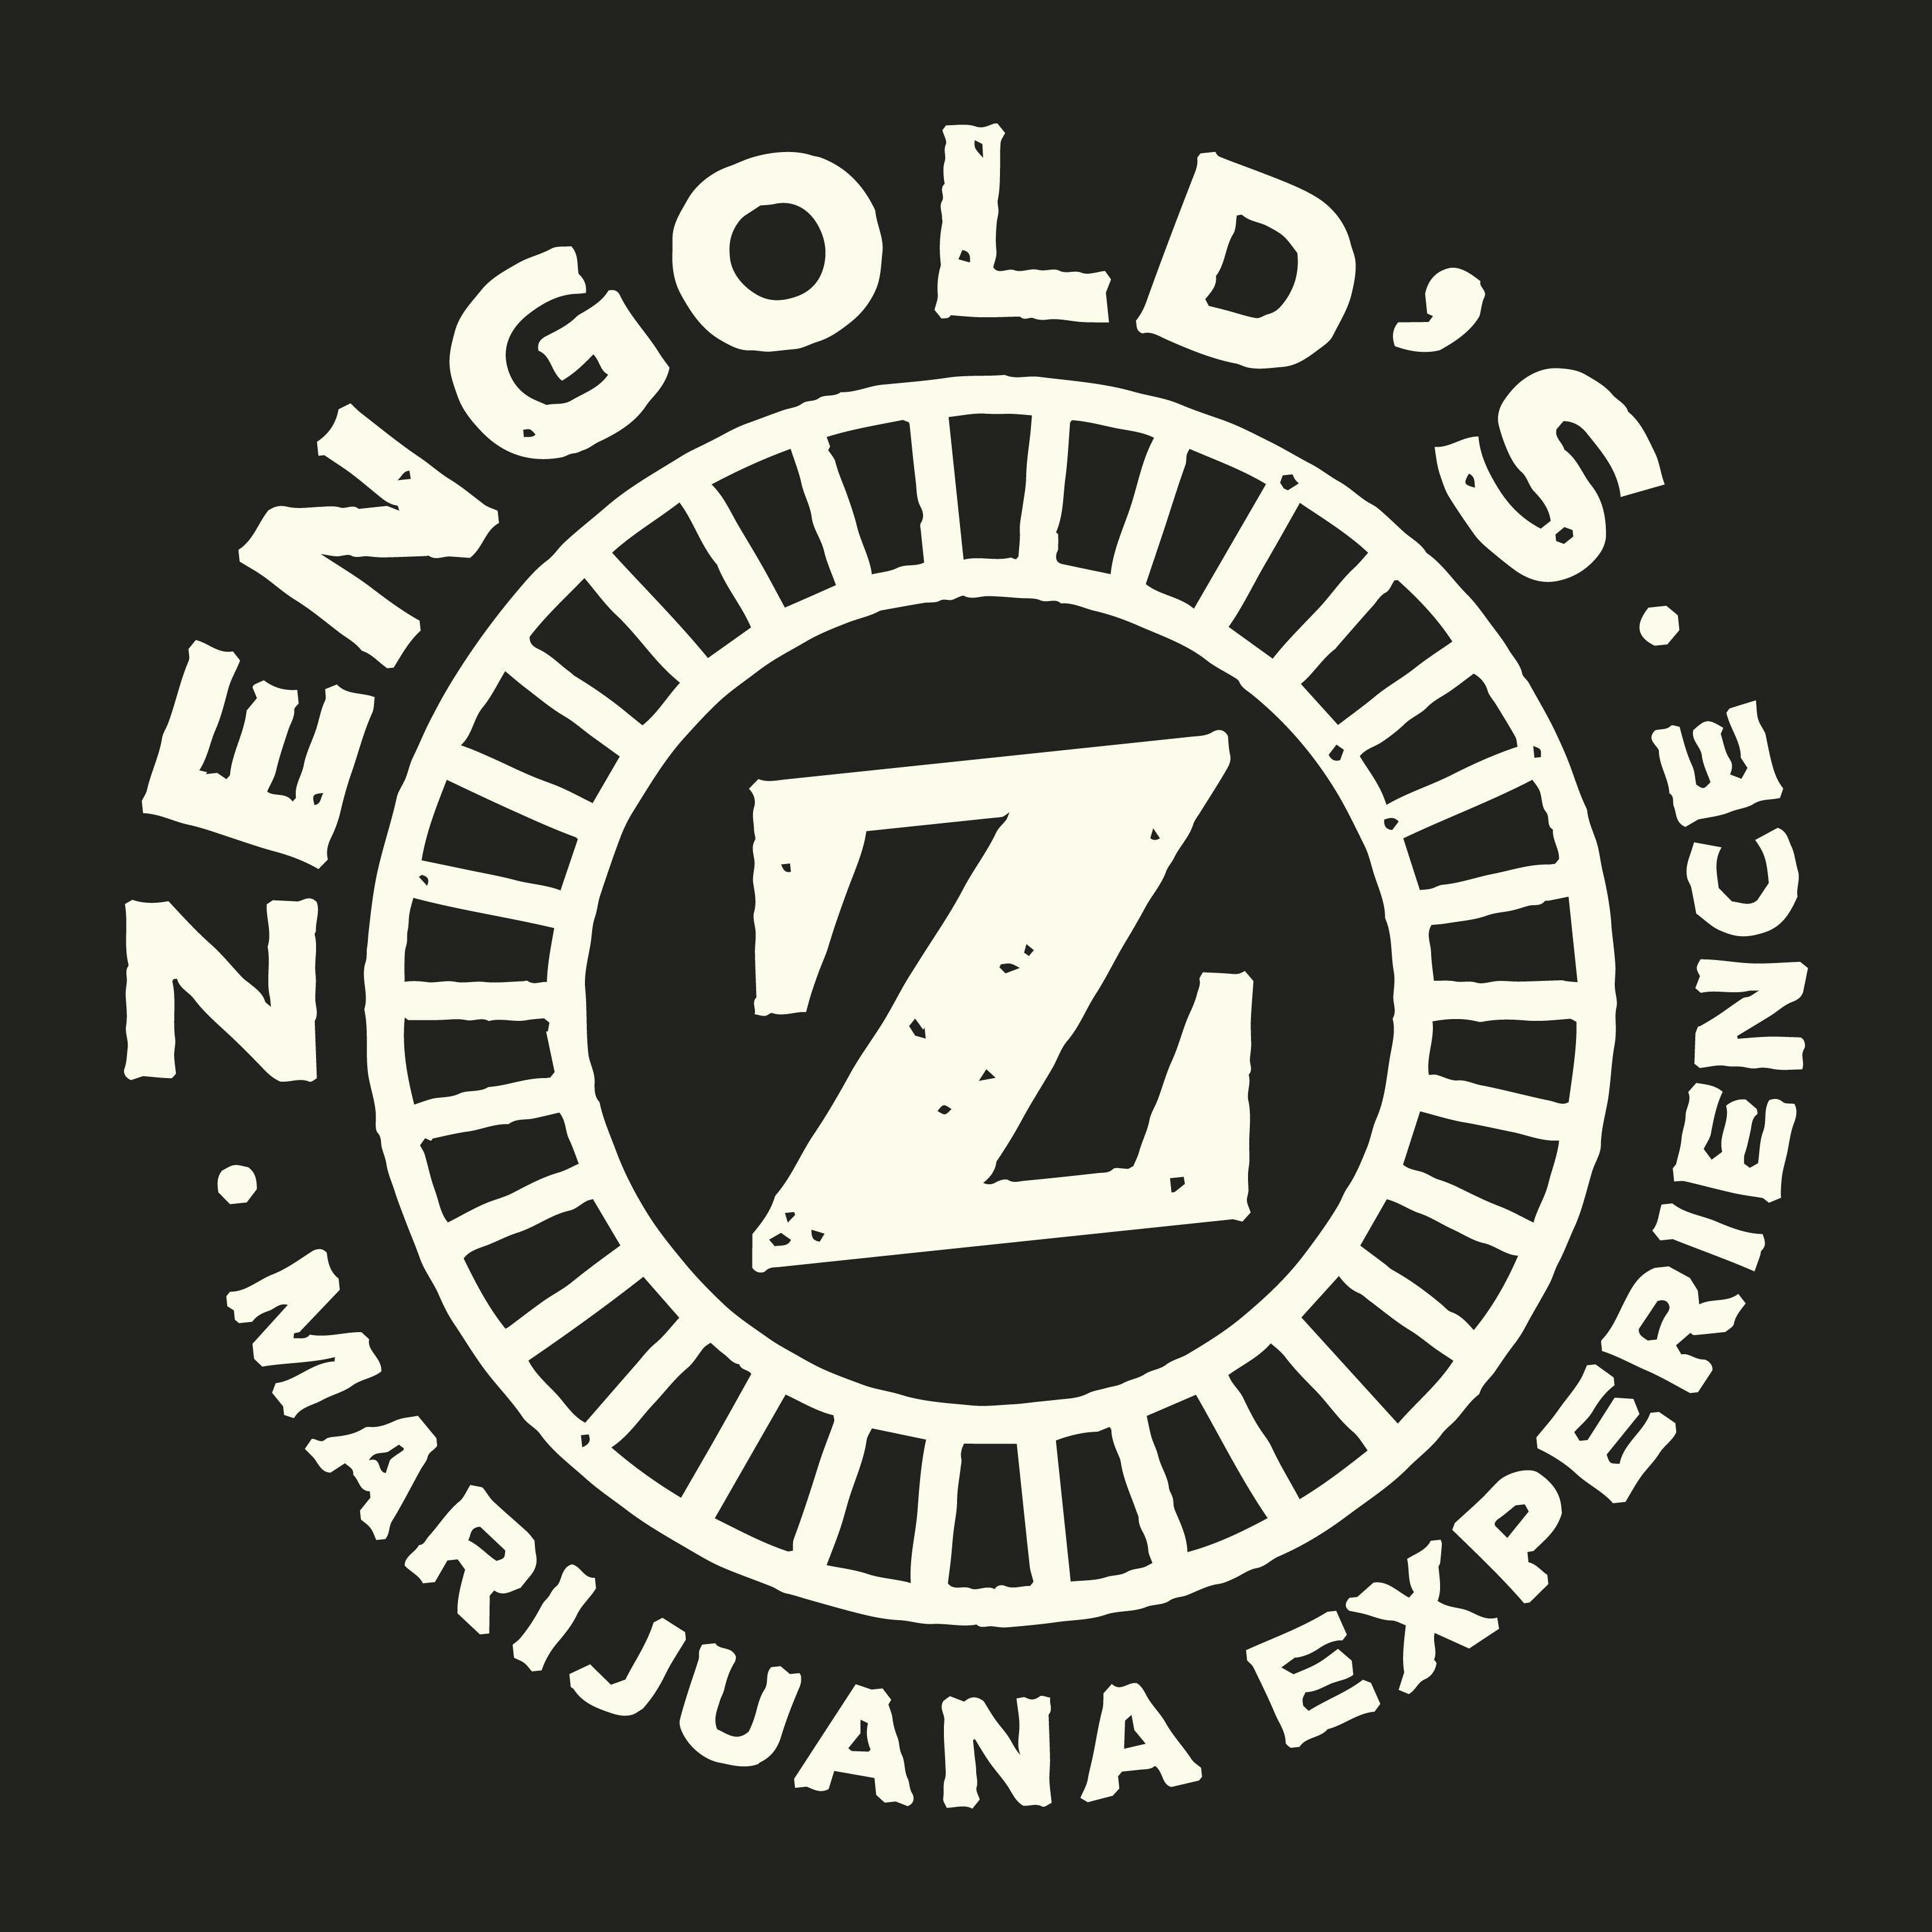 Zengold's 